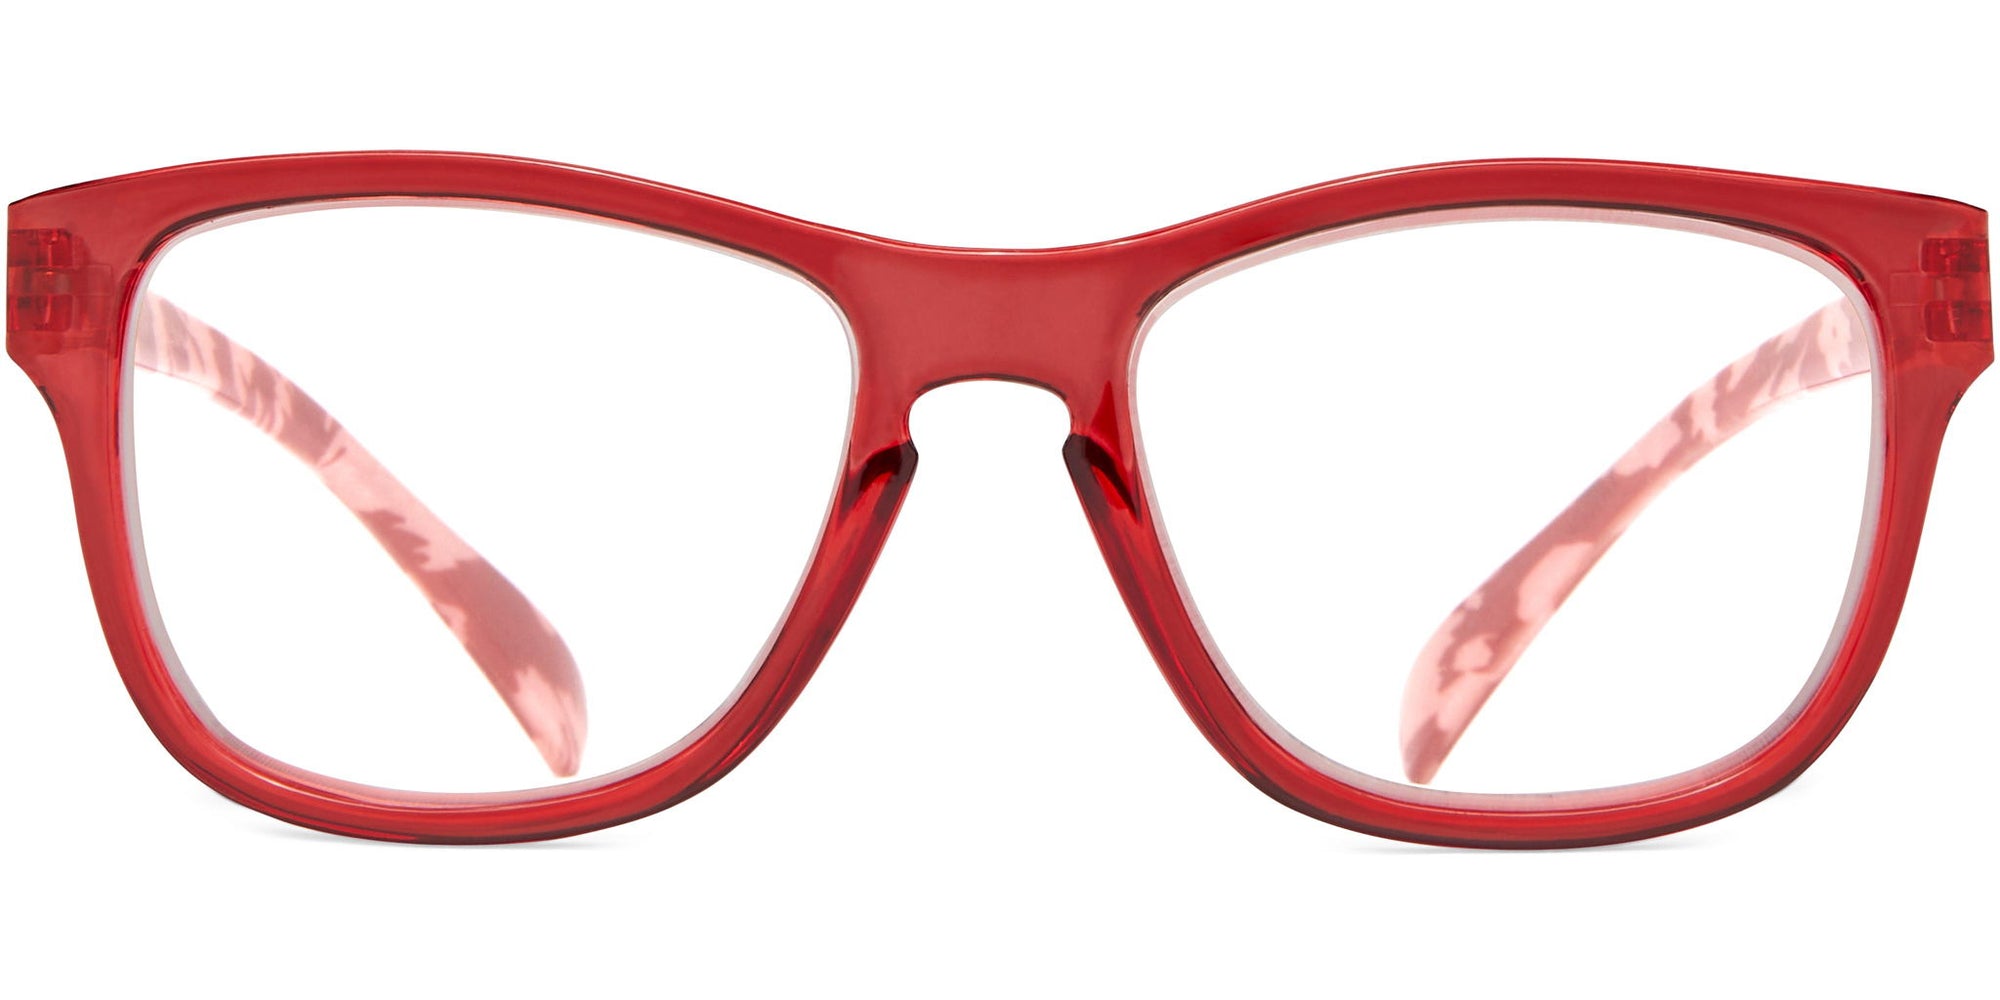 Eudora - Red / 1.25 - Reading Glasses